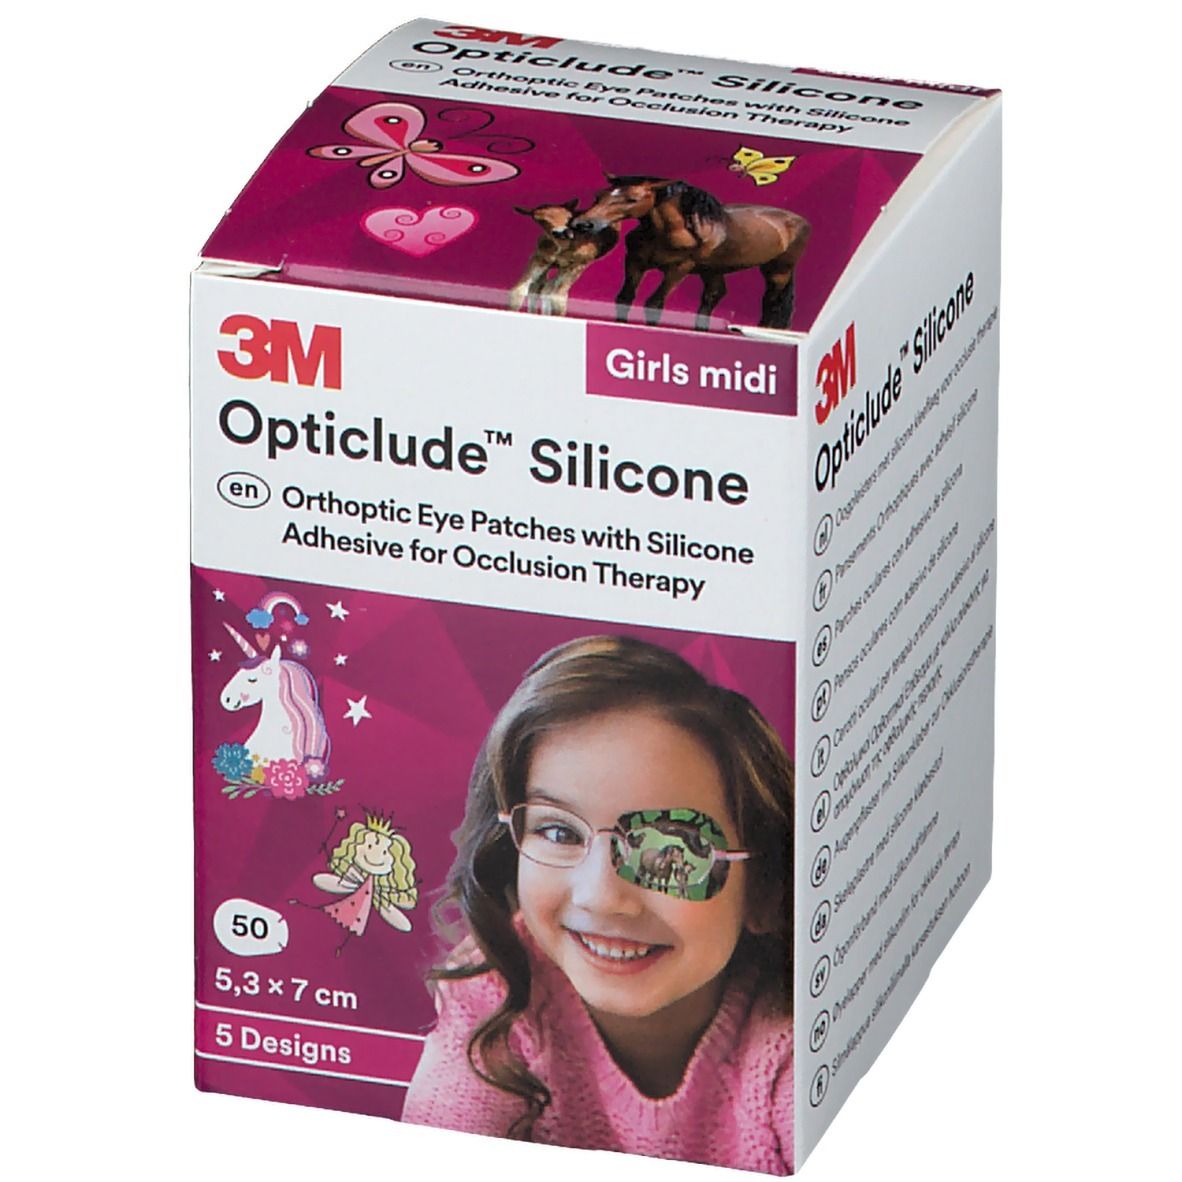 3M™ Opticlude™ Silicone Girl Midi 5,3 x 7,0 cm